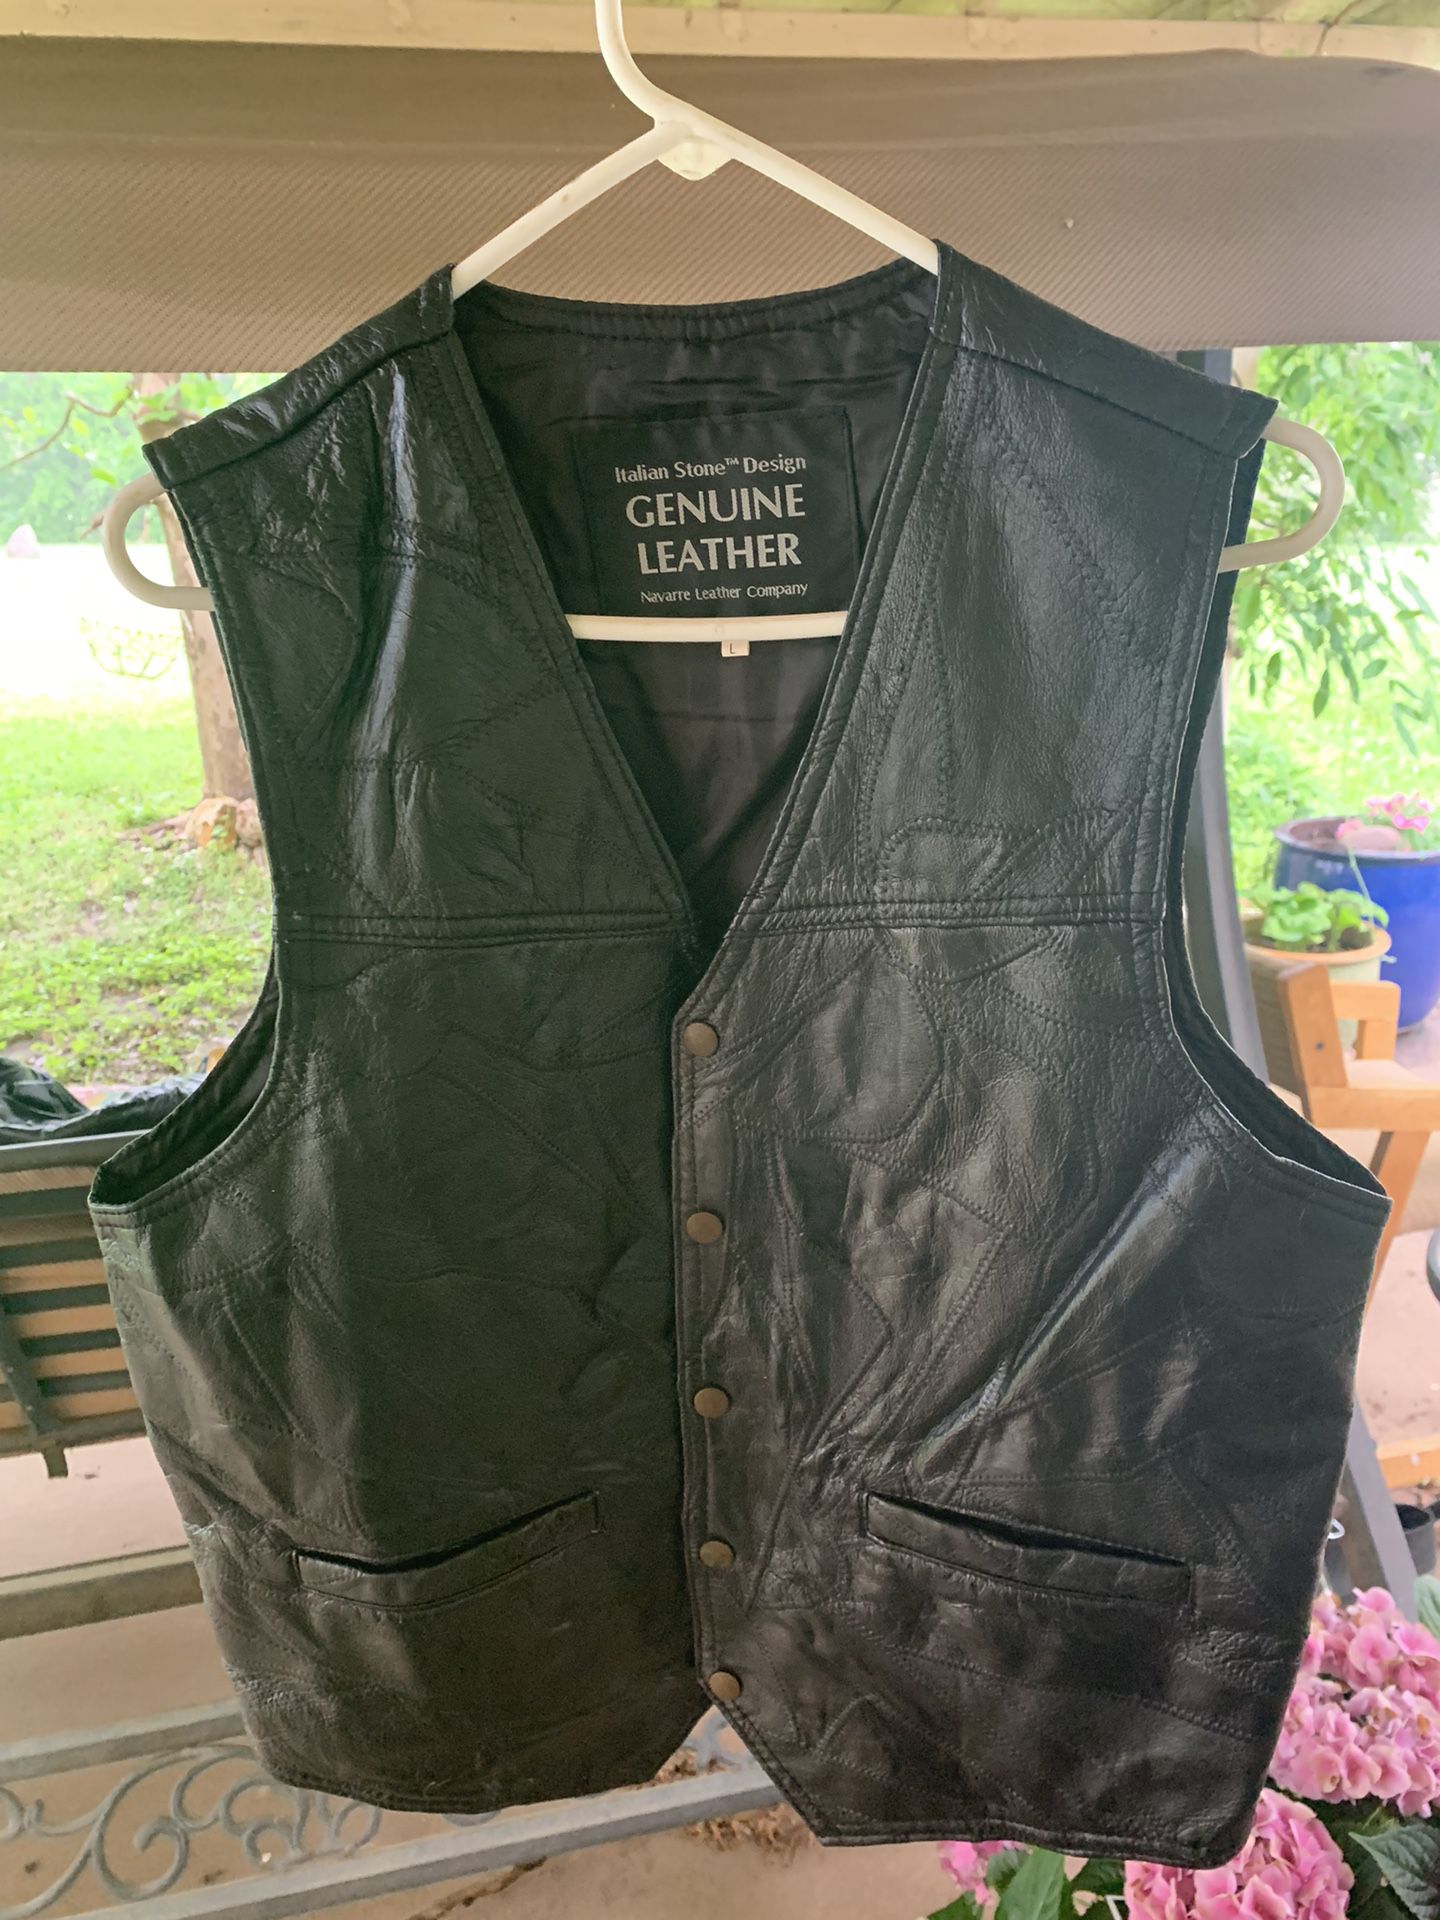 Italian Stone& Design Genuine Leather Vest 